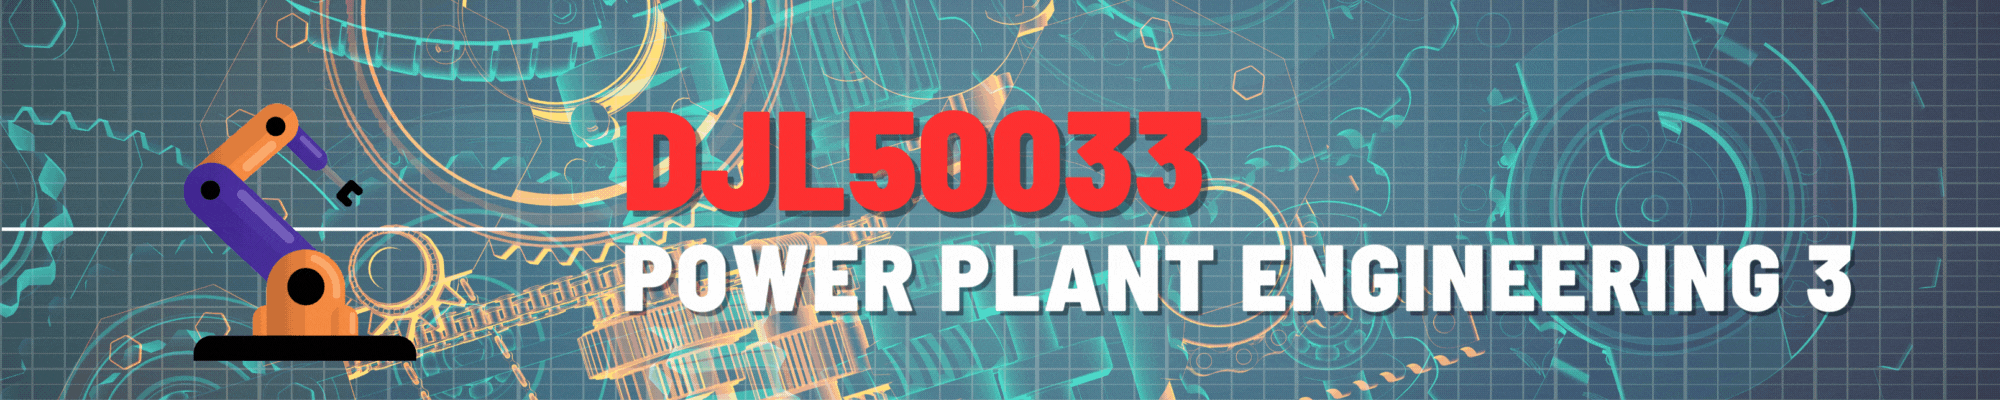 DJL50033 POWER PLANT ENGINEERING 3